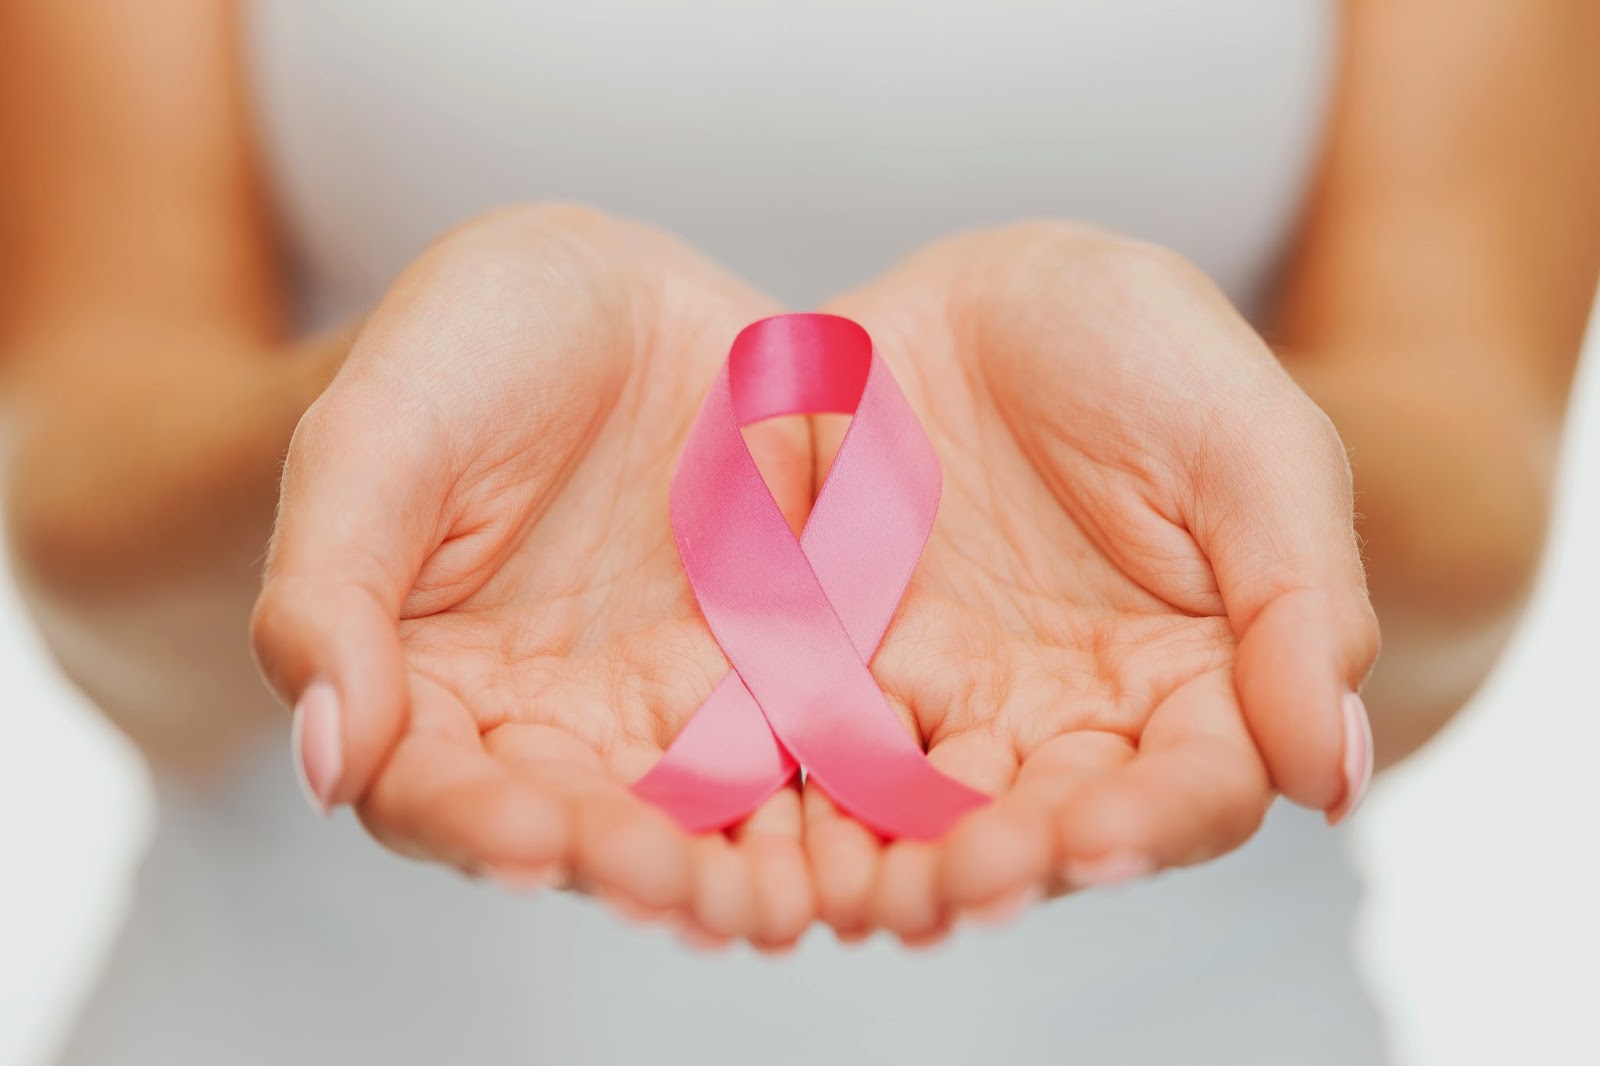 BRCA1 e BRCA2 - Plano de saúde deve custear teste genético